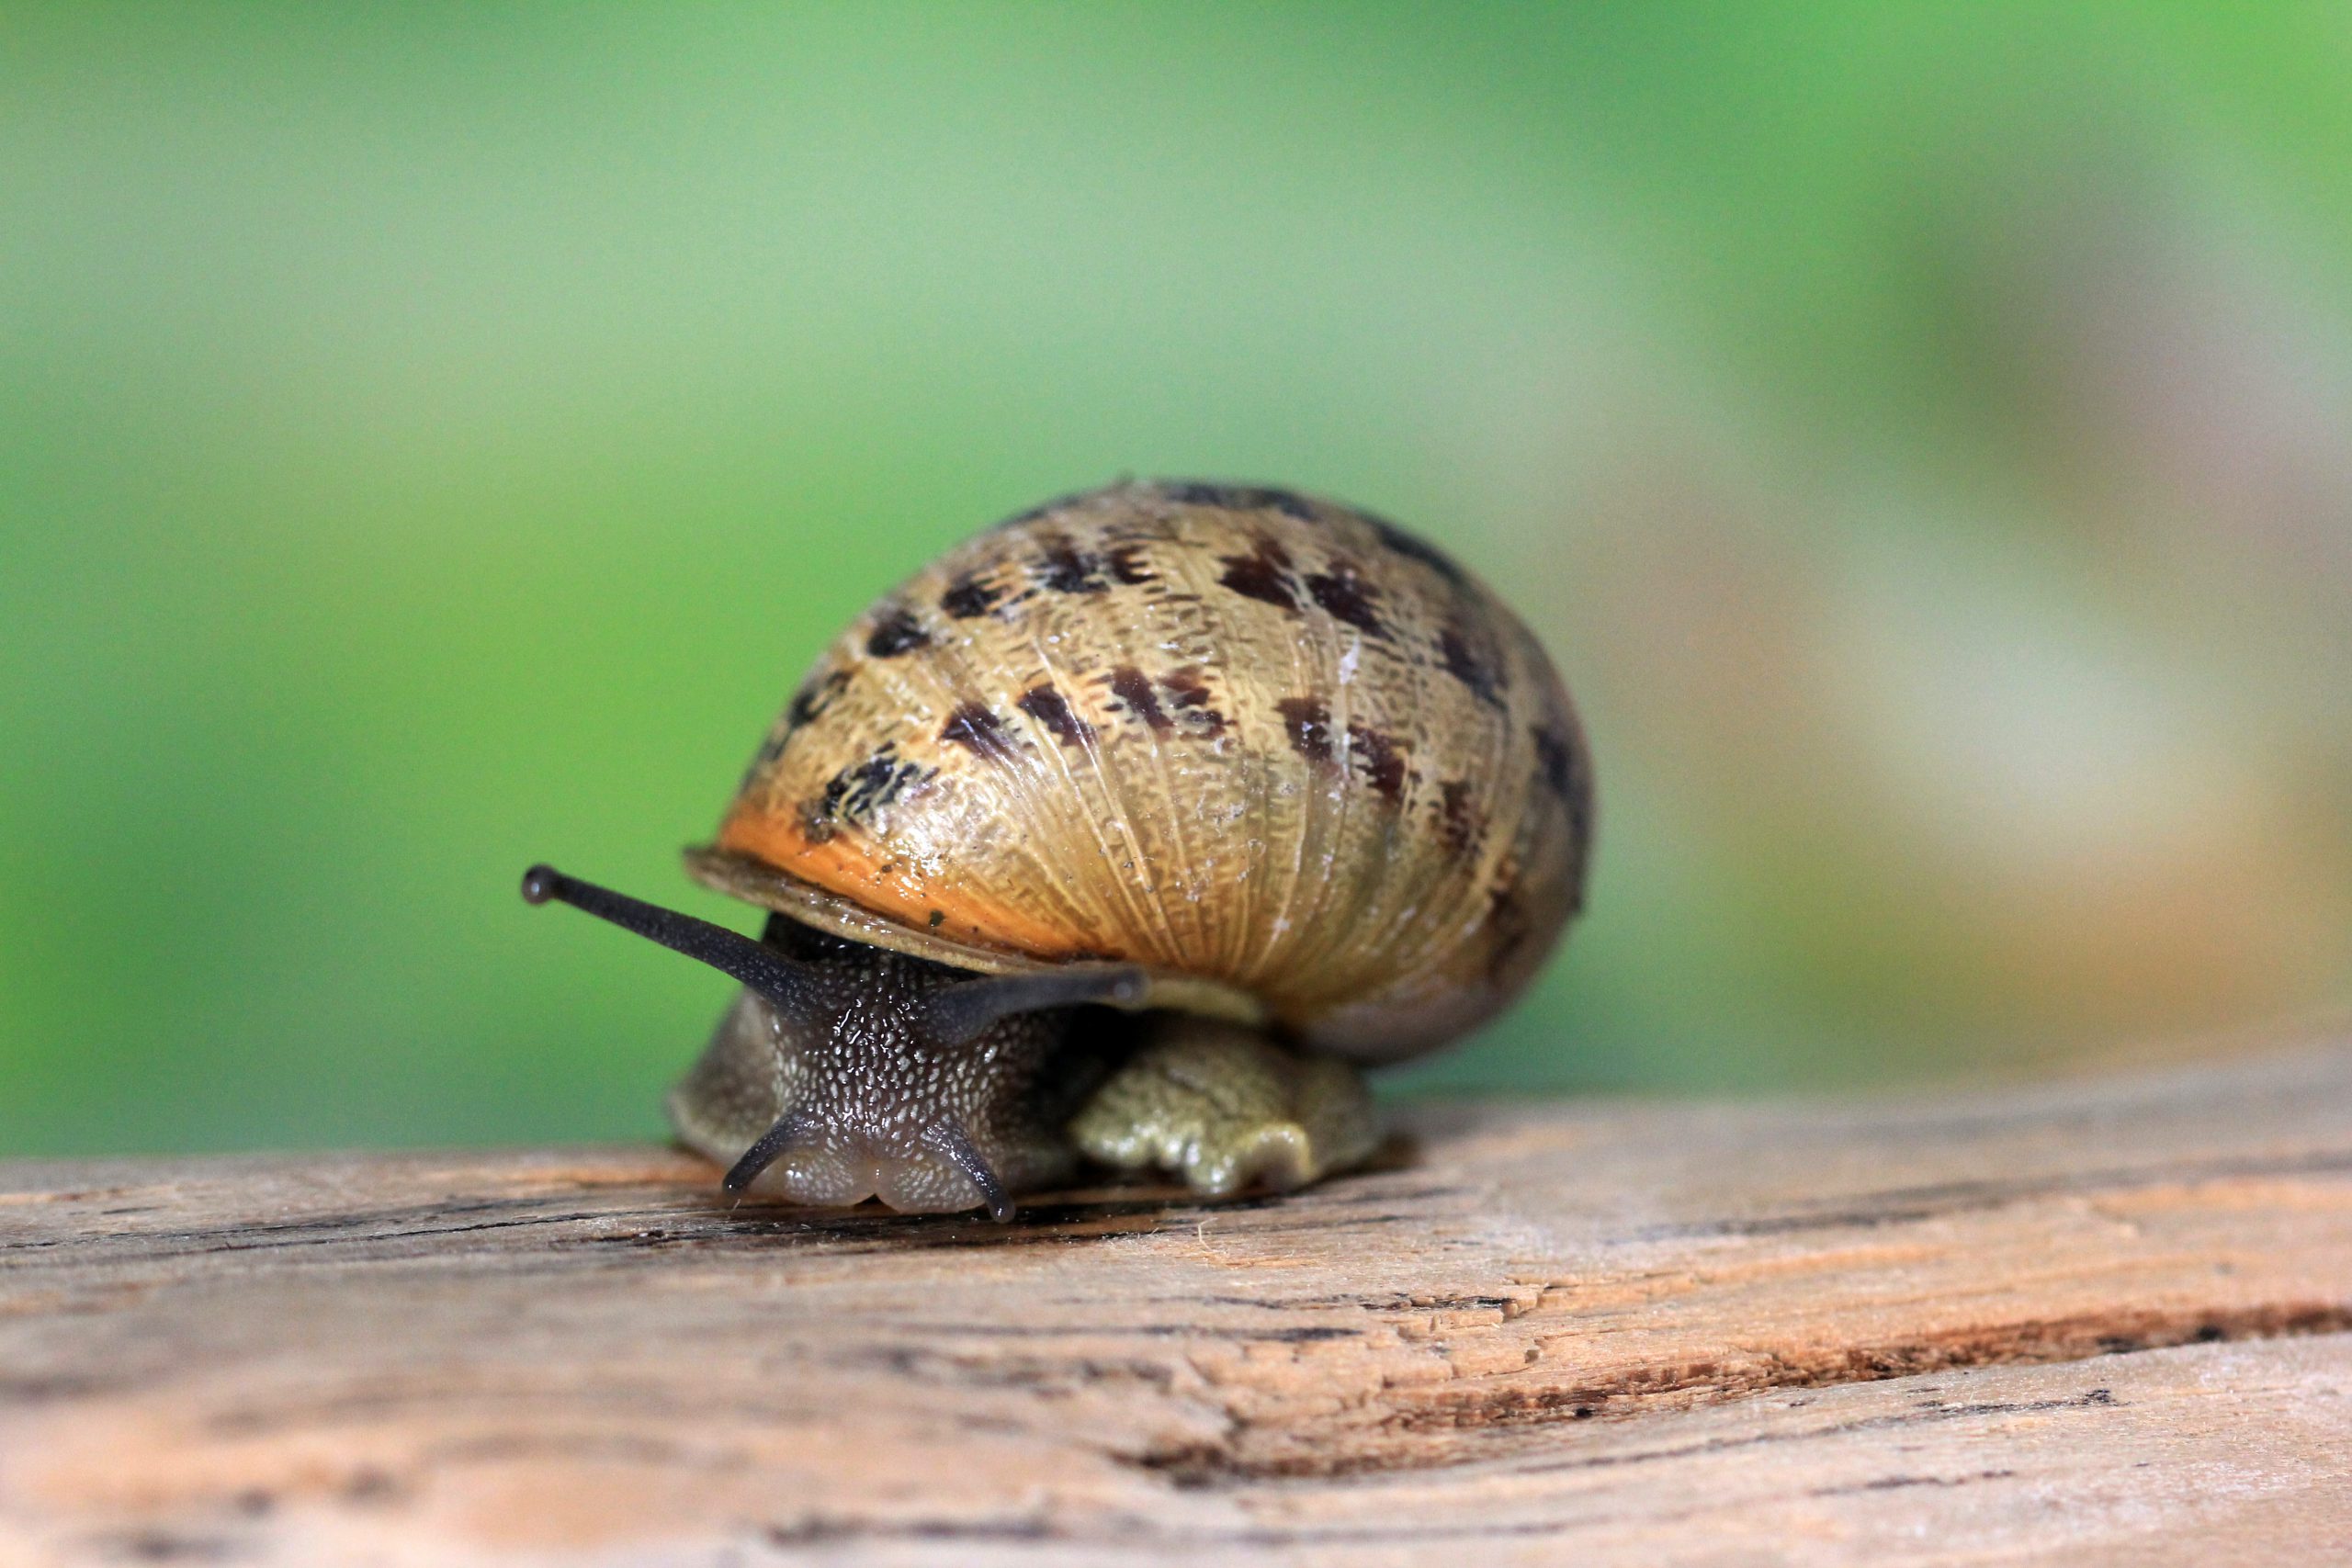 hd photo of snail